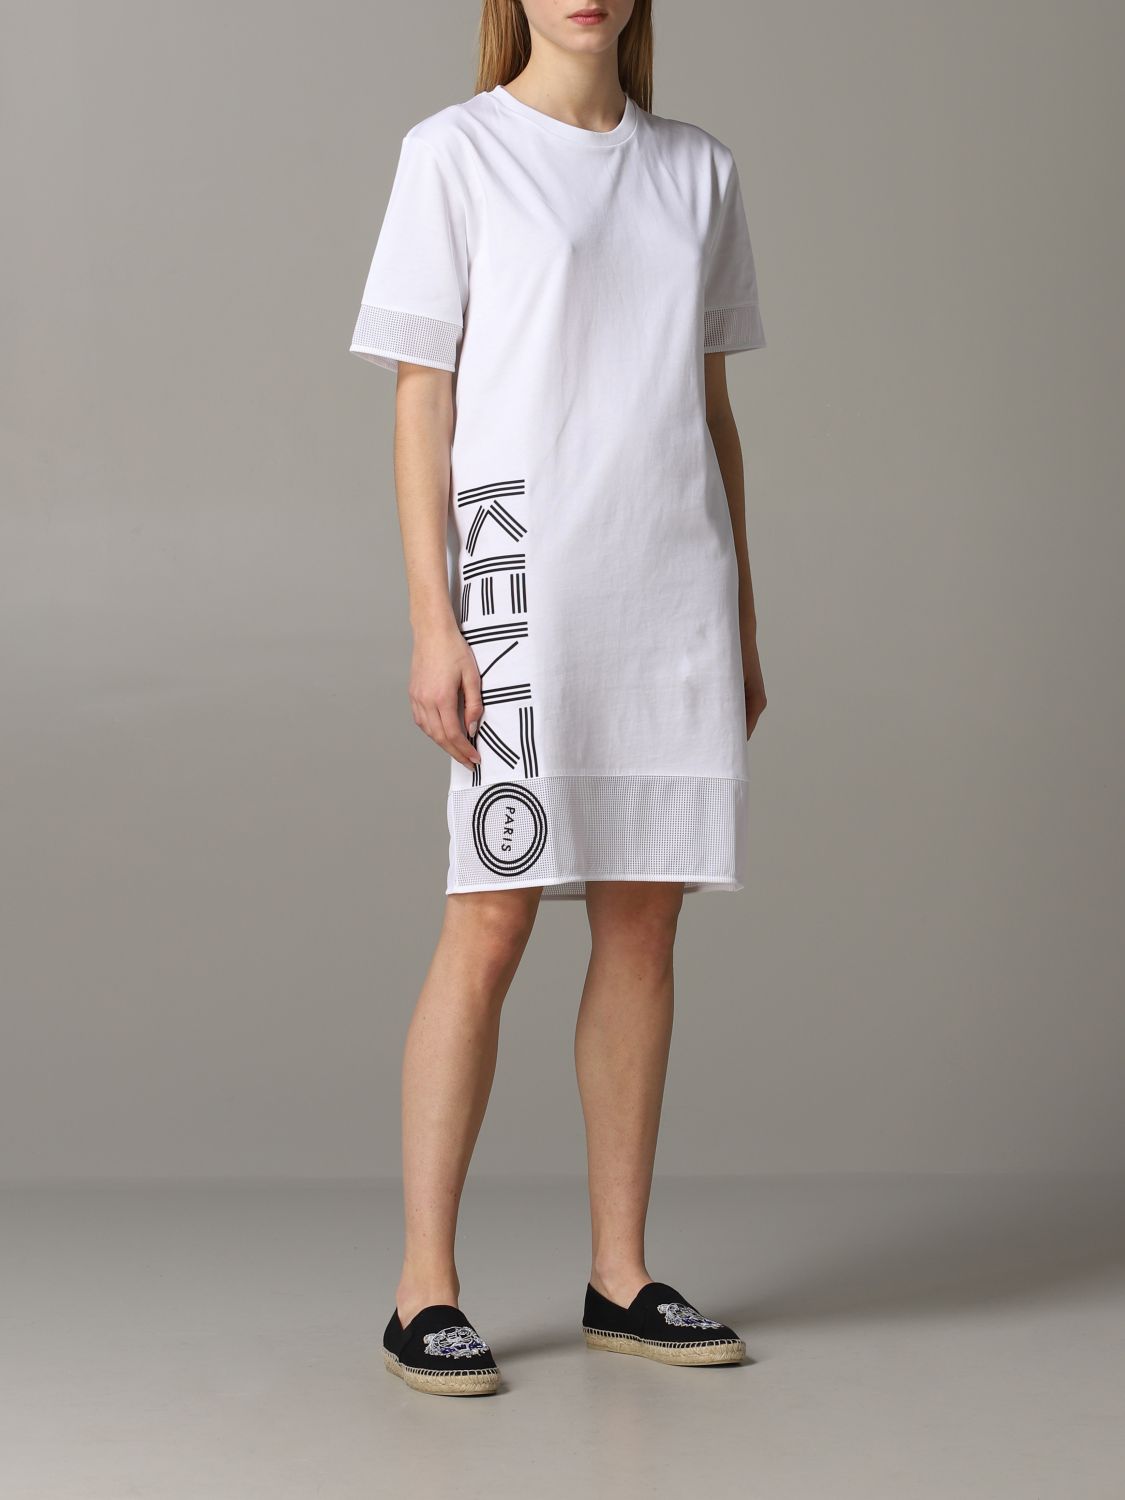 kenzo white dress